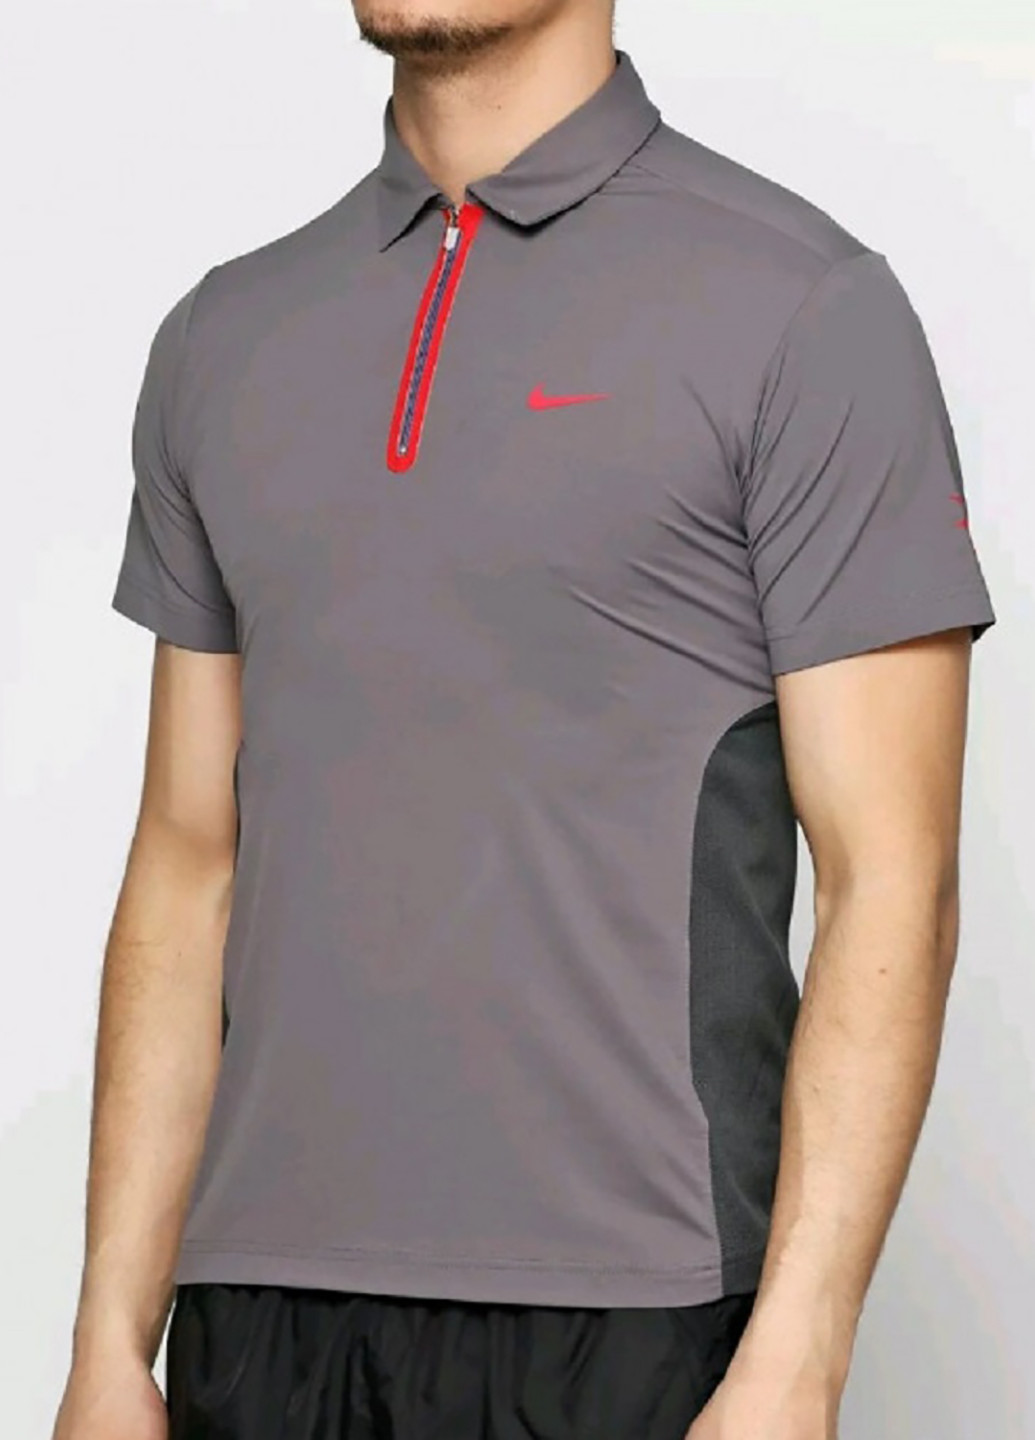 Темно-серая футболка-поло для мужчин Nike с логотипом